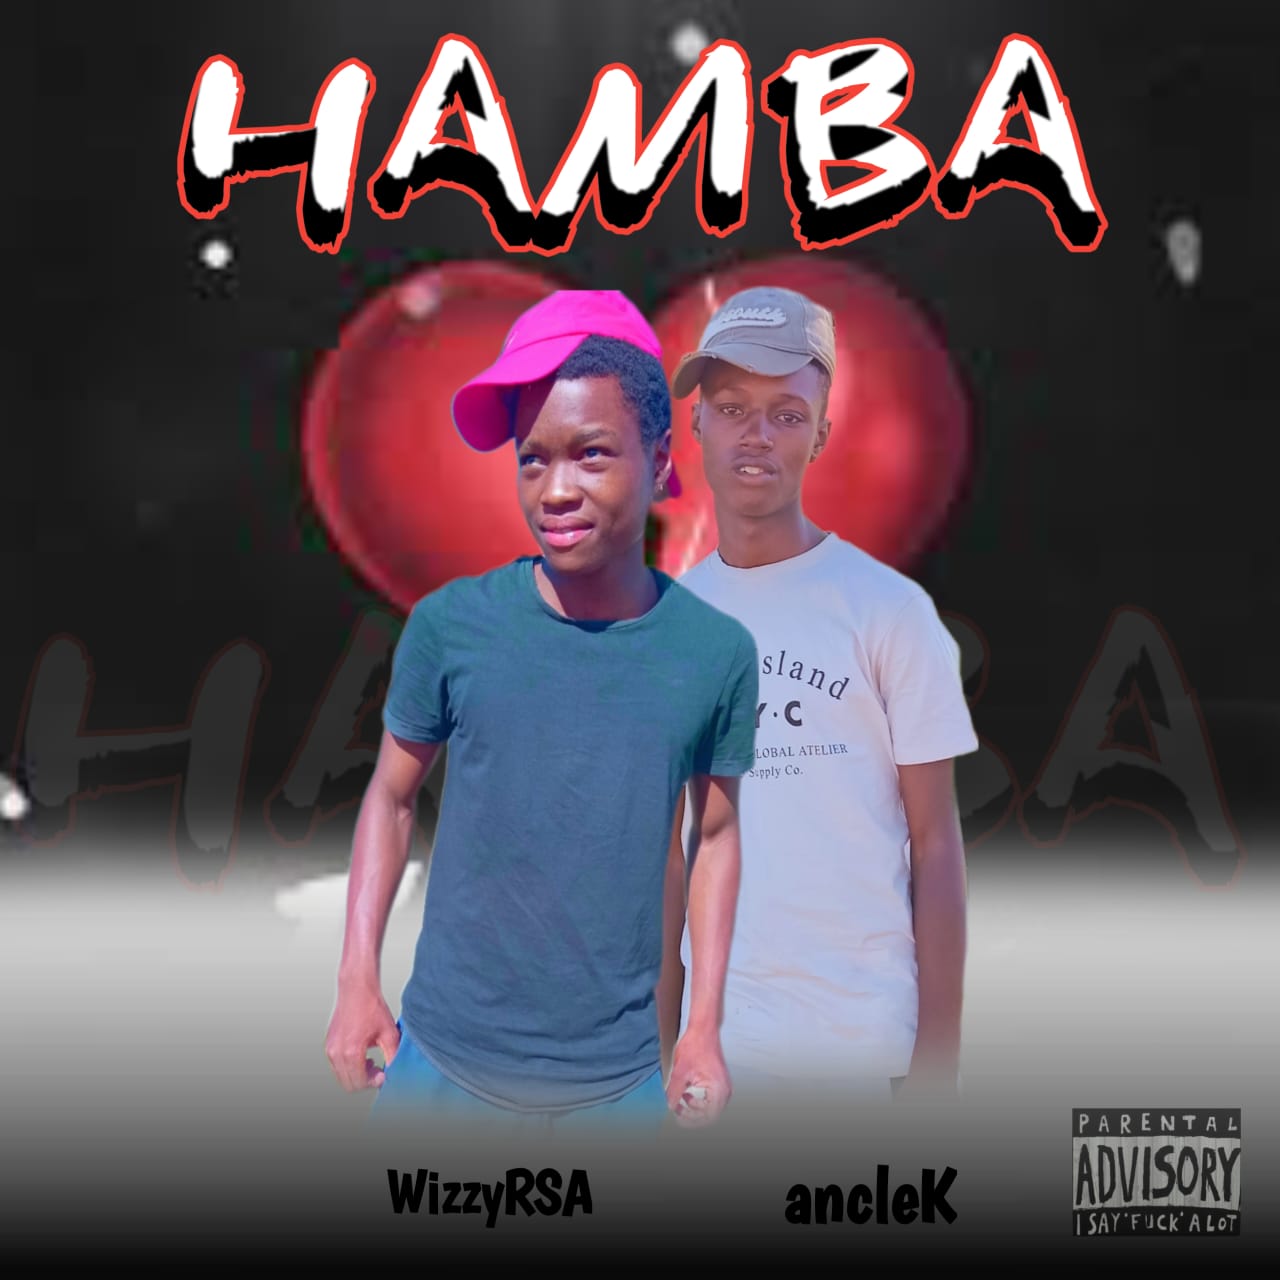 Hamba - Ancle k ft wizzy rsa